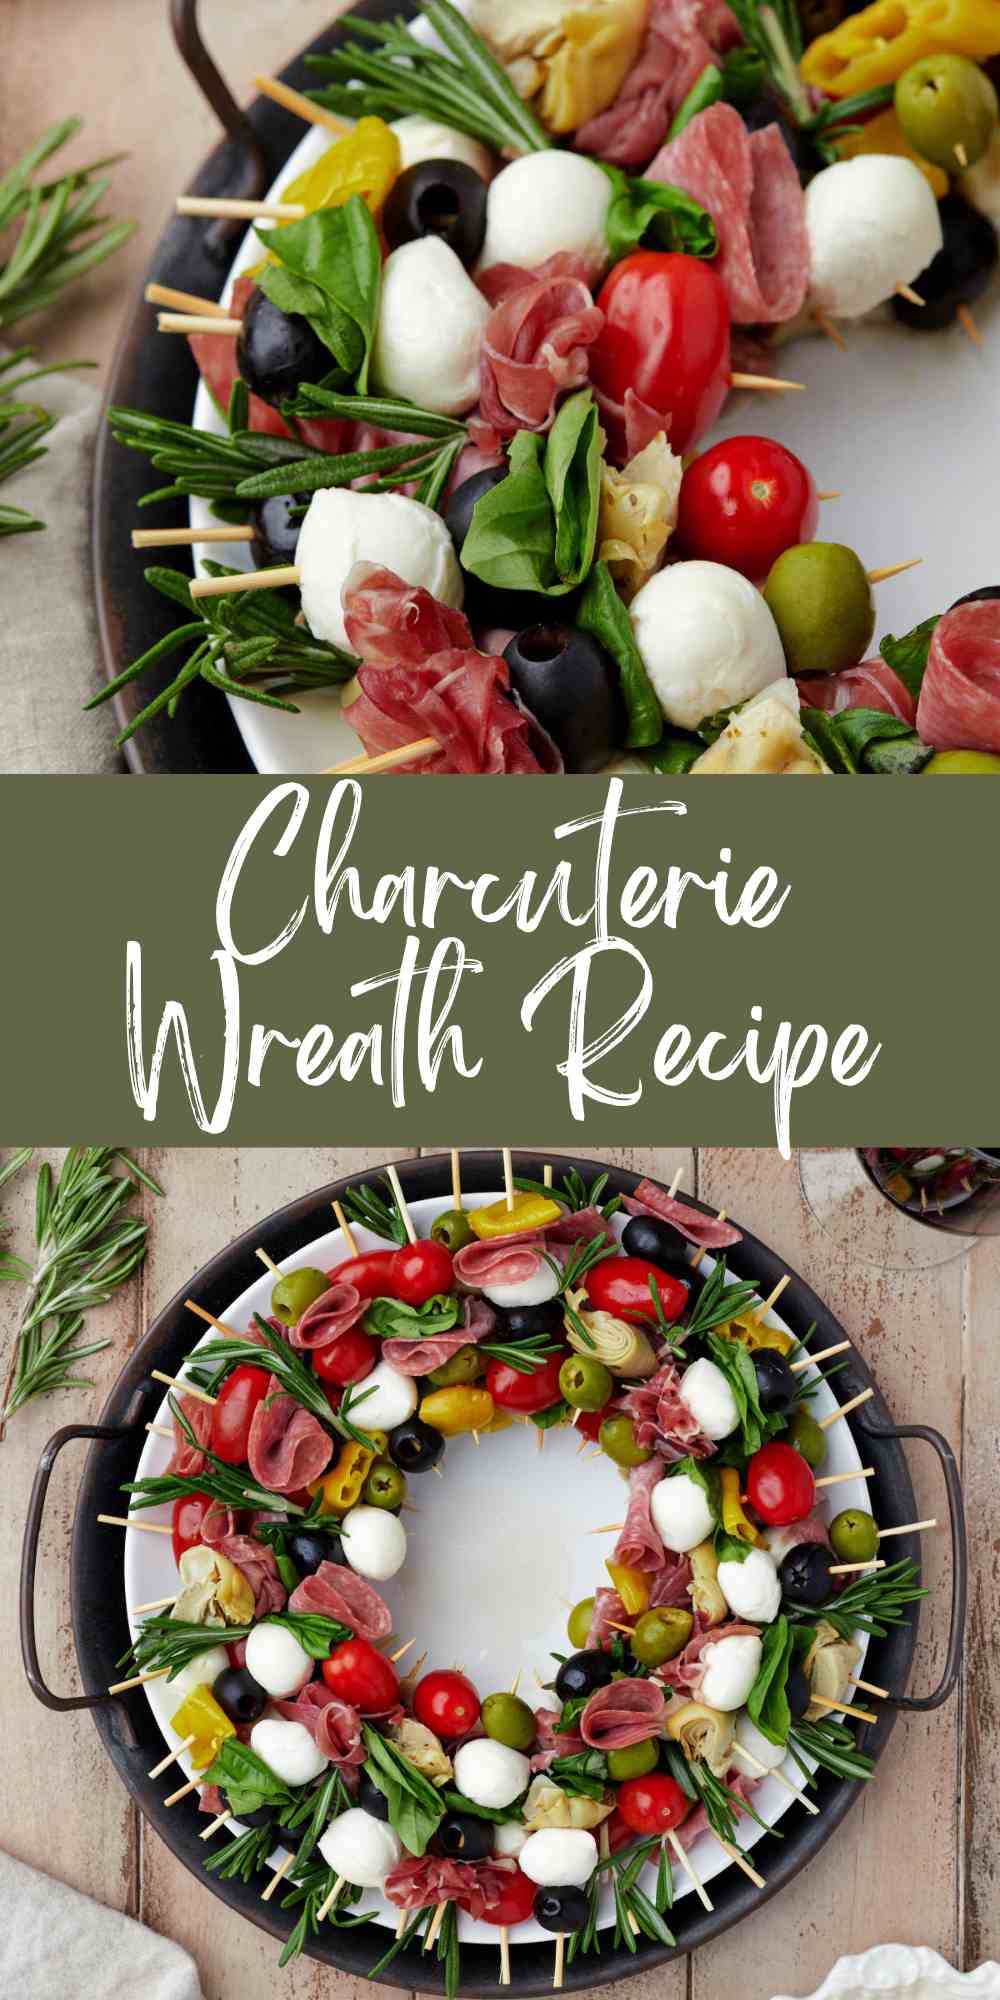 Charcuterie Wreath - I Heart Eating